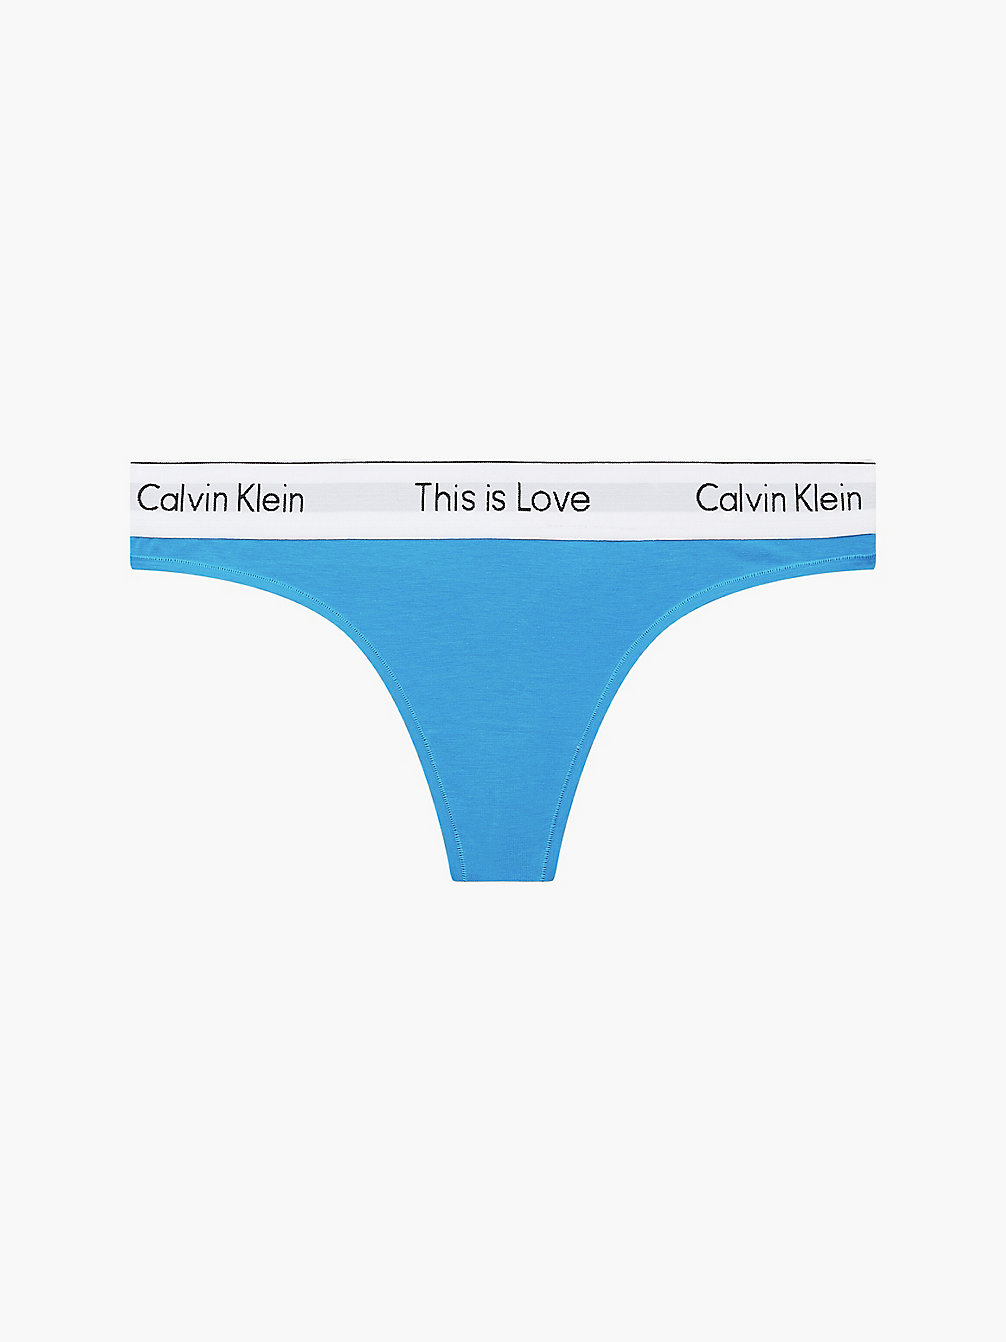 DEEP SKY BLUE Thong - Pride undefined women Calvin Klein